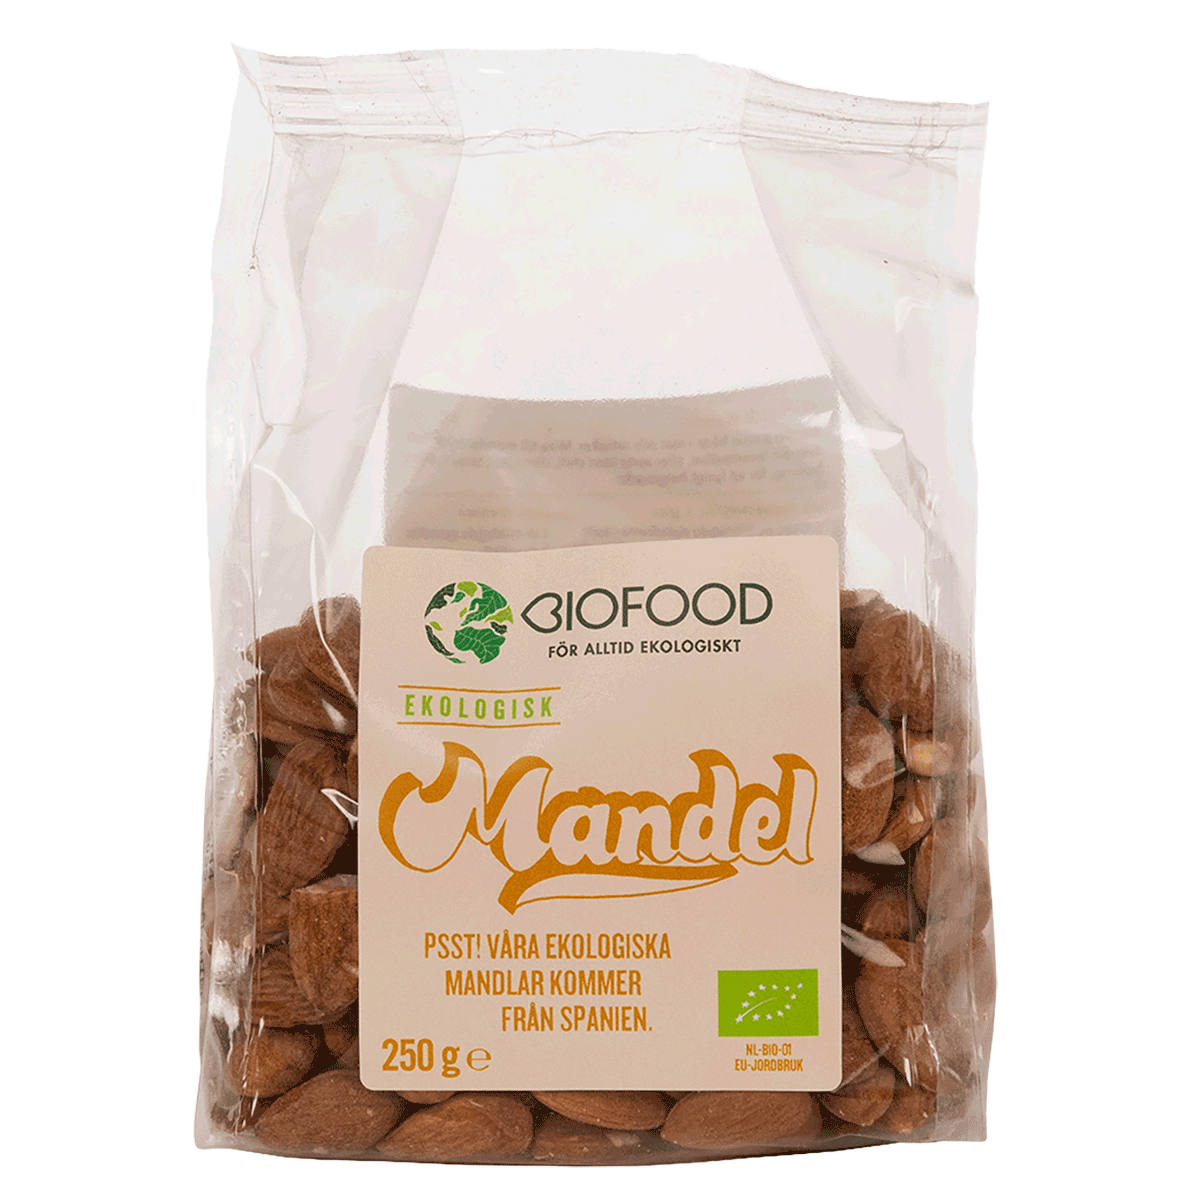 Biofood's Mandel'